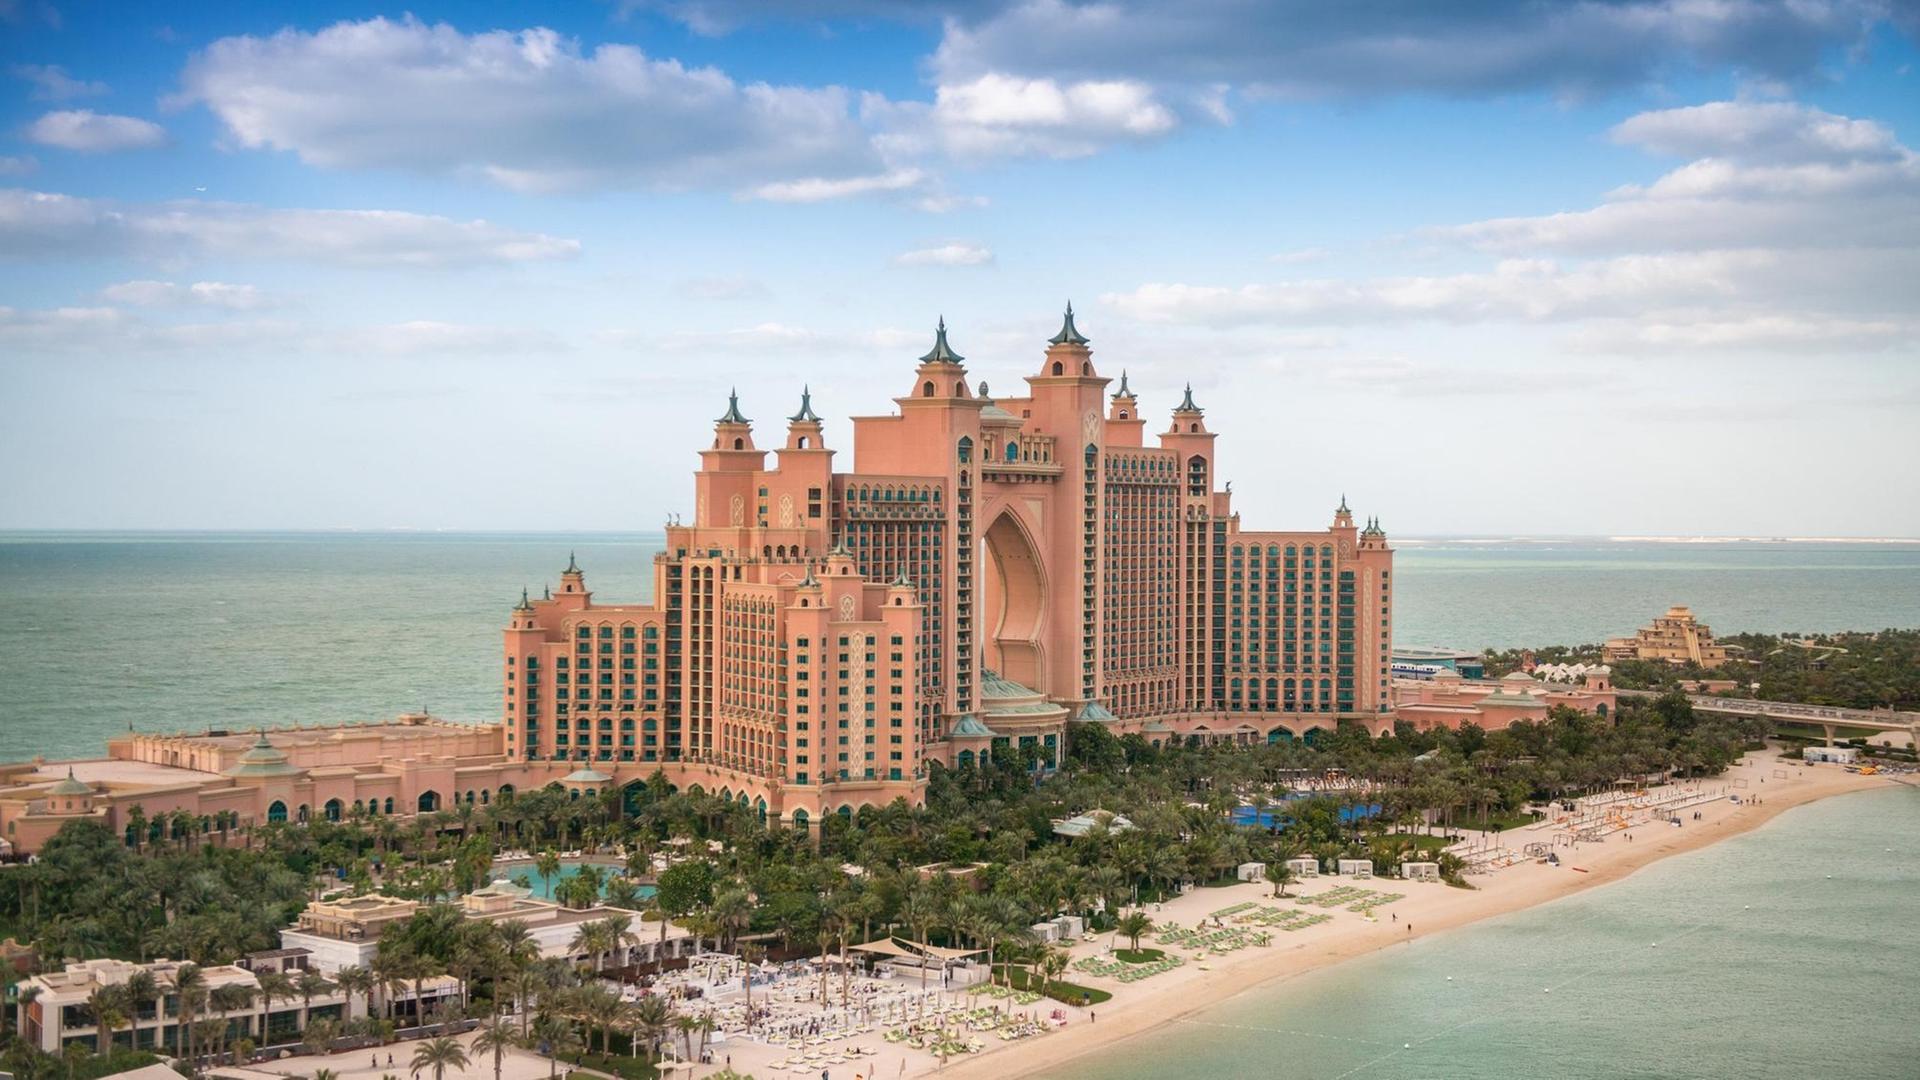 Panoramaansicht des Luxushotels Atlantis the Palm in Dubai